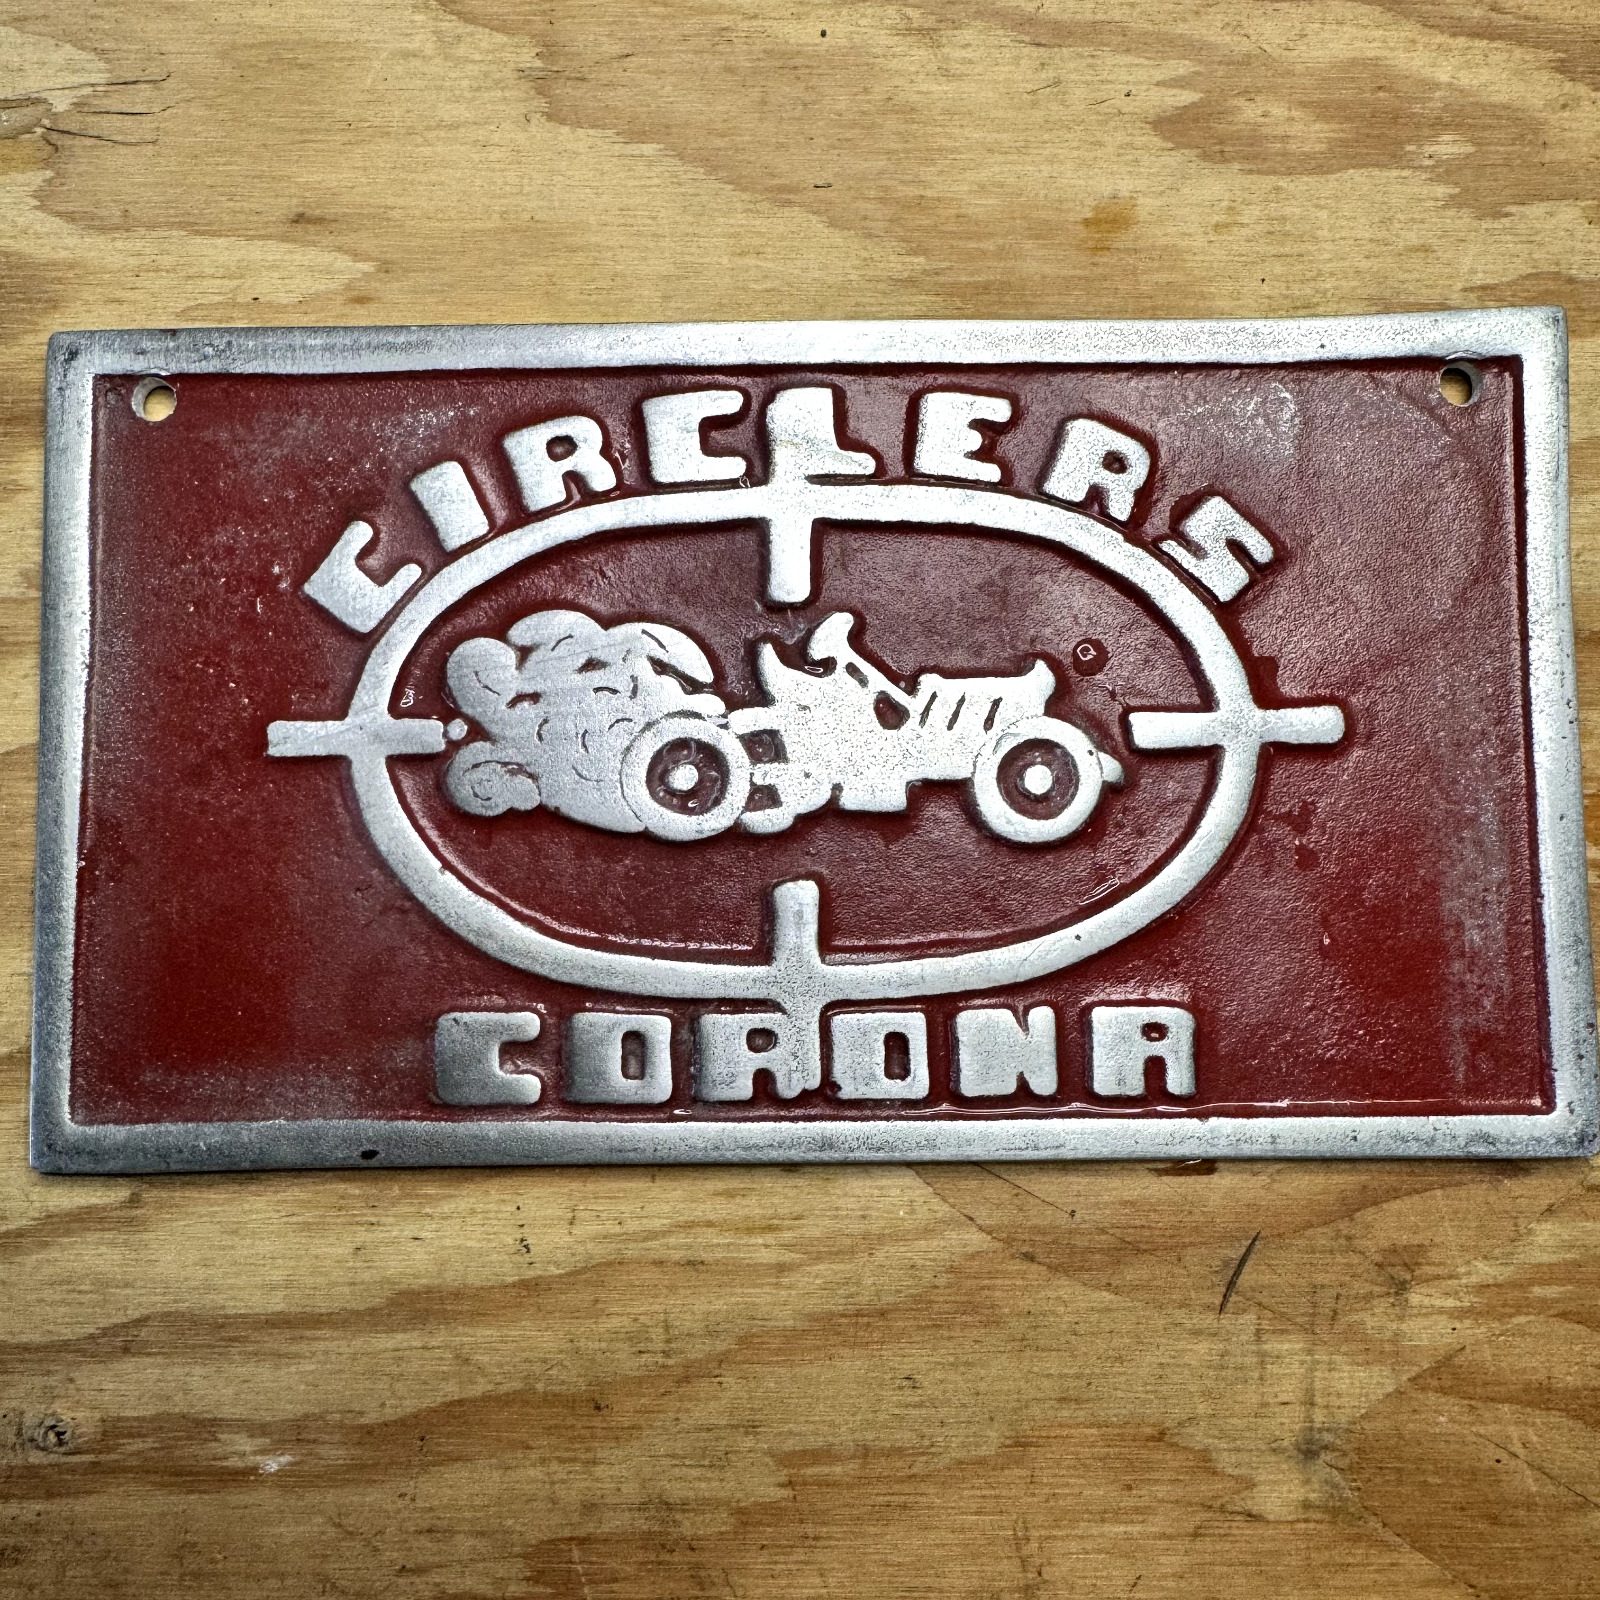 Original Circlers Corona Car Club Plaque